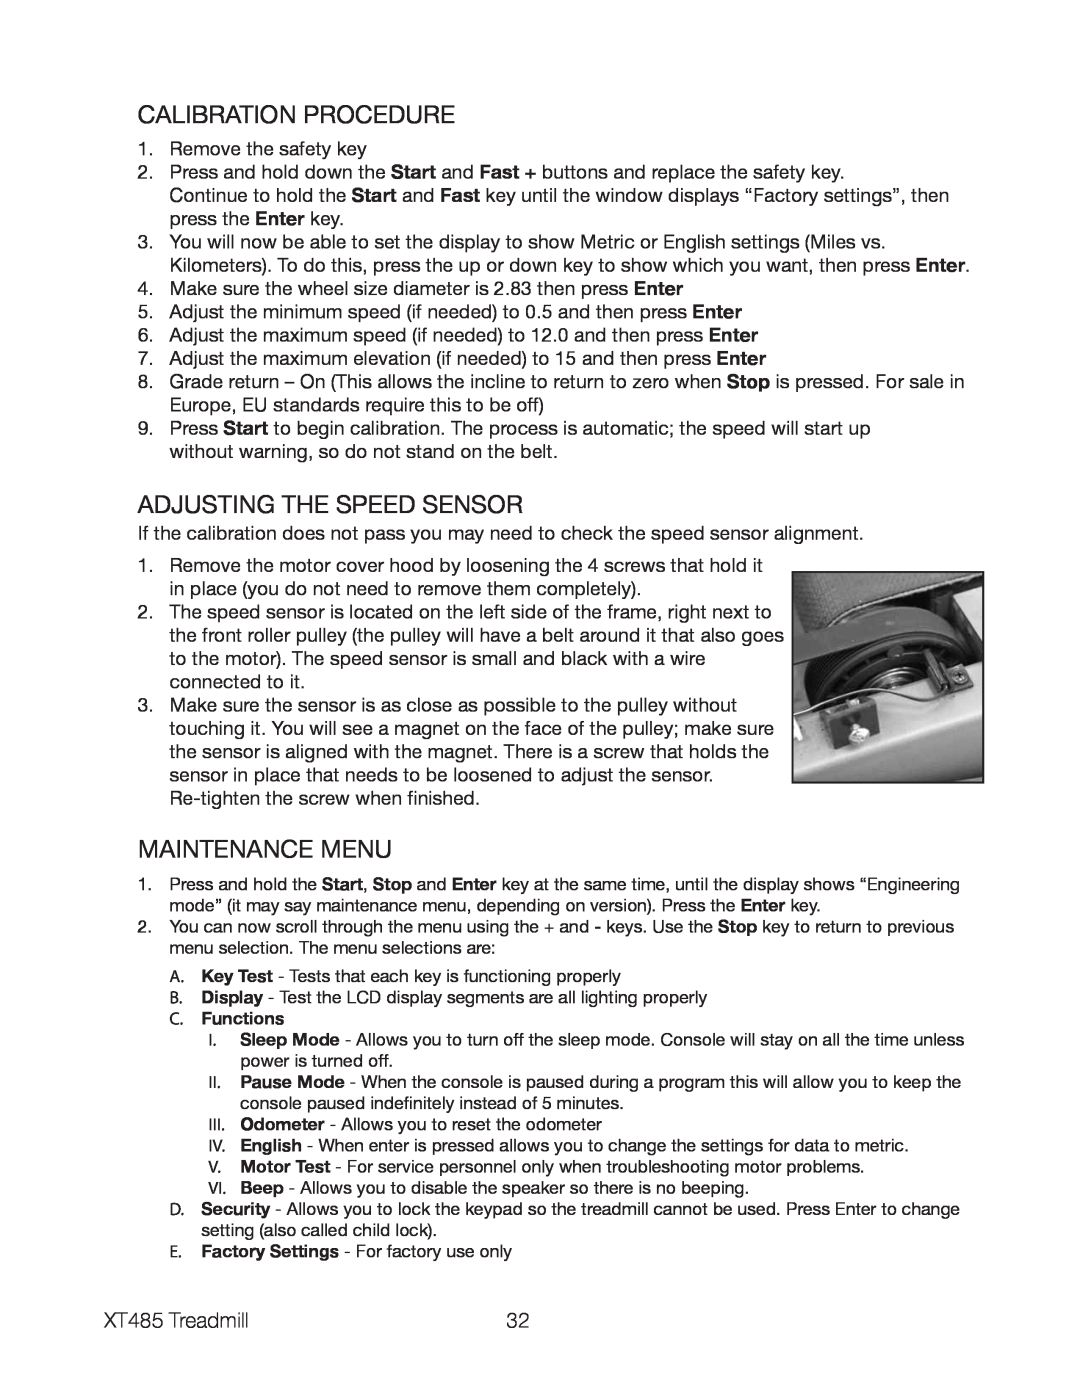 Spirit XT485 owner manual Calibration Procedure, Adjusting The Speed Sensor, Maintenance Menu 